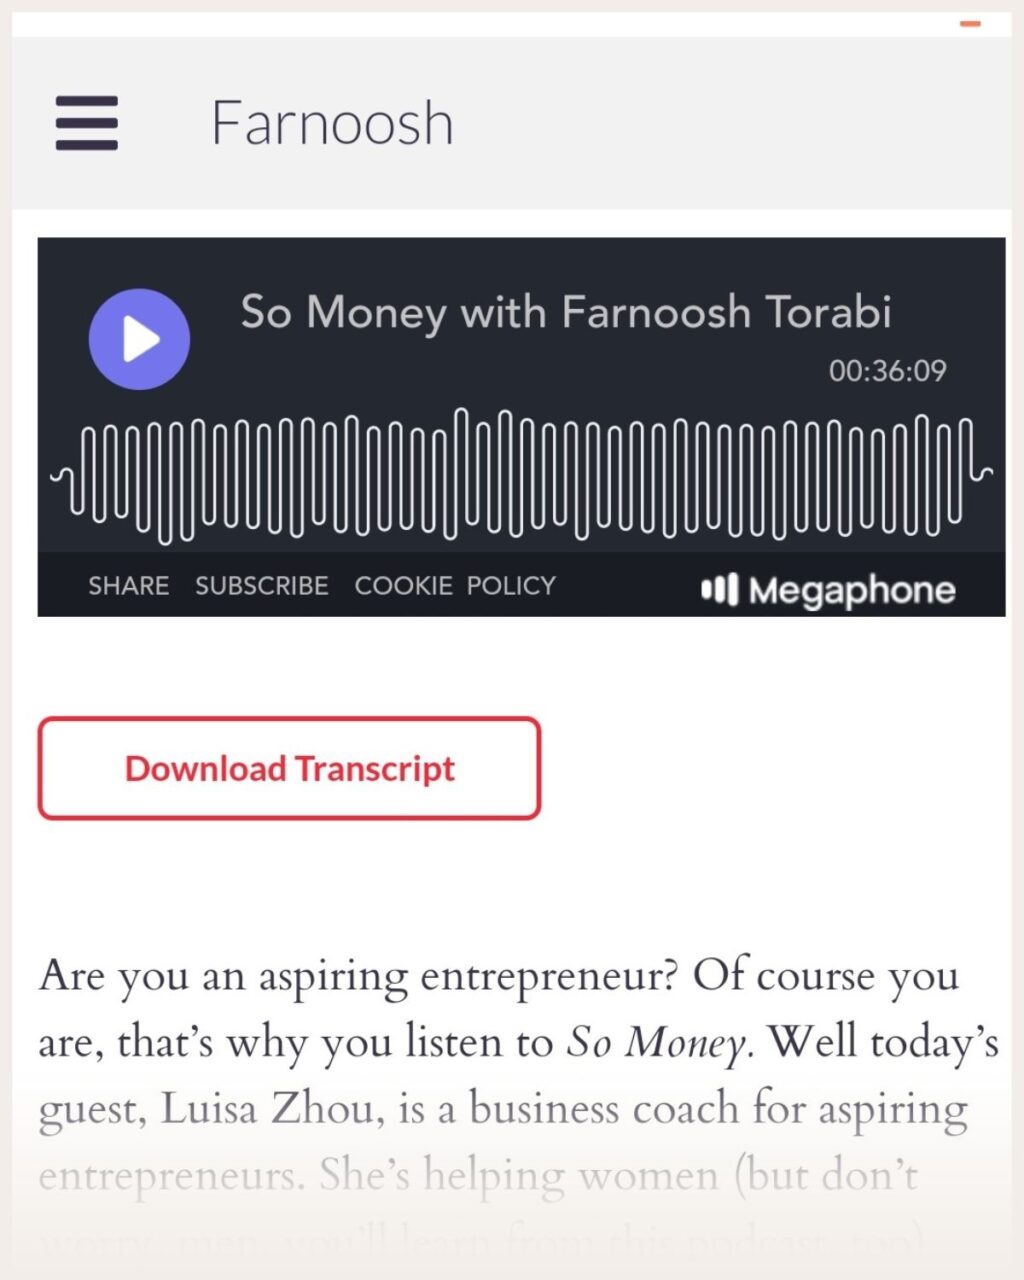 So Money podcast image